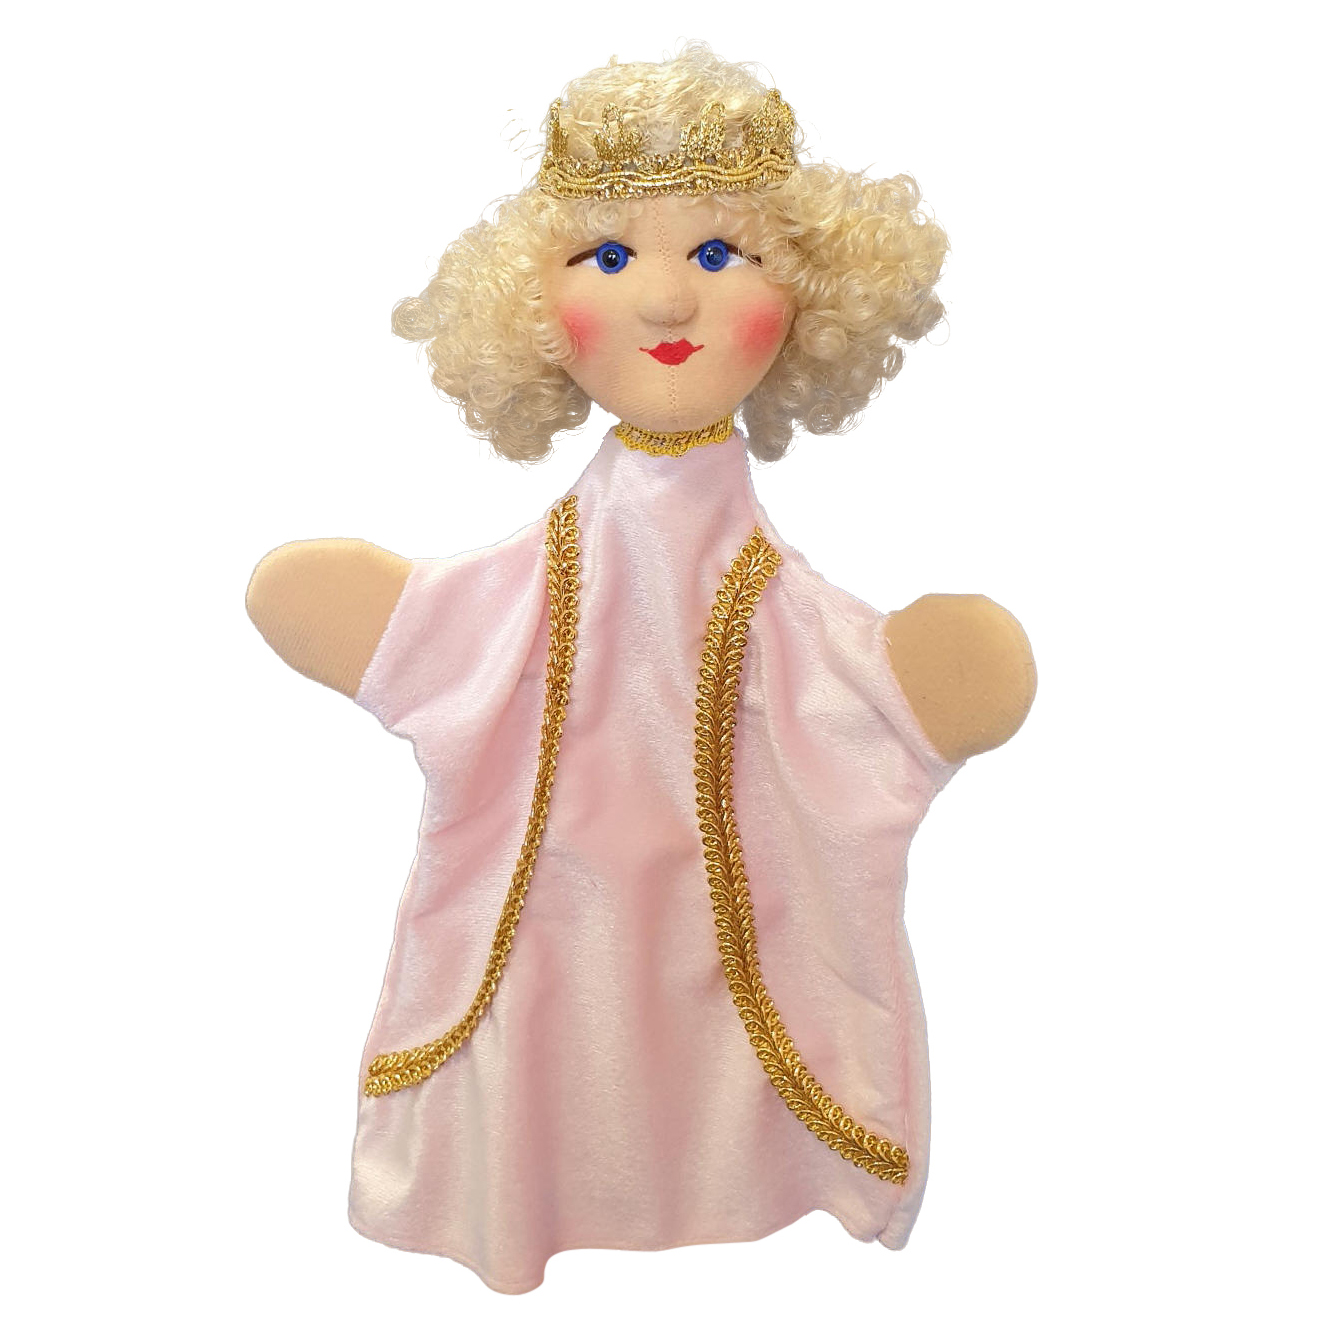 Hand puppet princess - KERSA classic